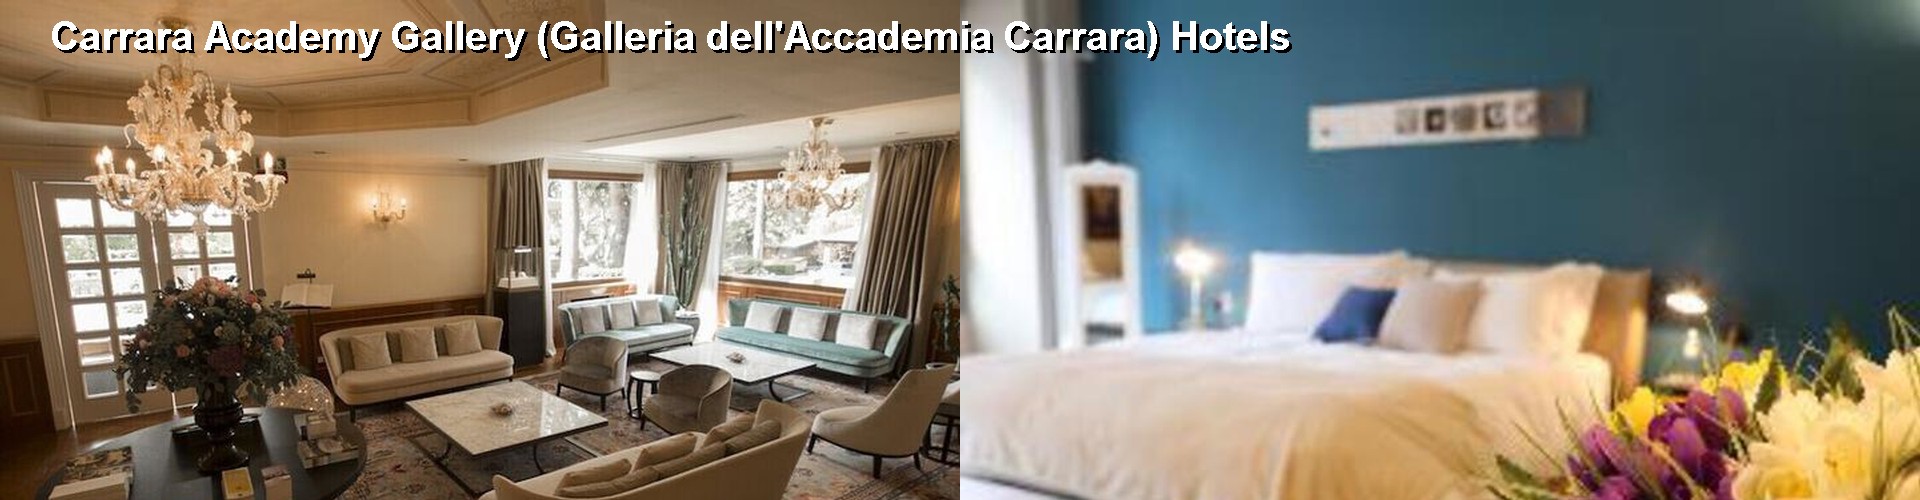 5 Best Hotels near Carrara Academy Gallery (Galleria dell'Accademia Carrara)